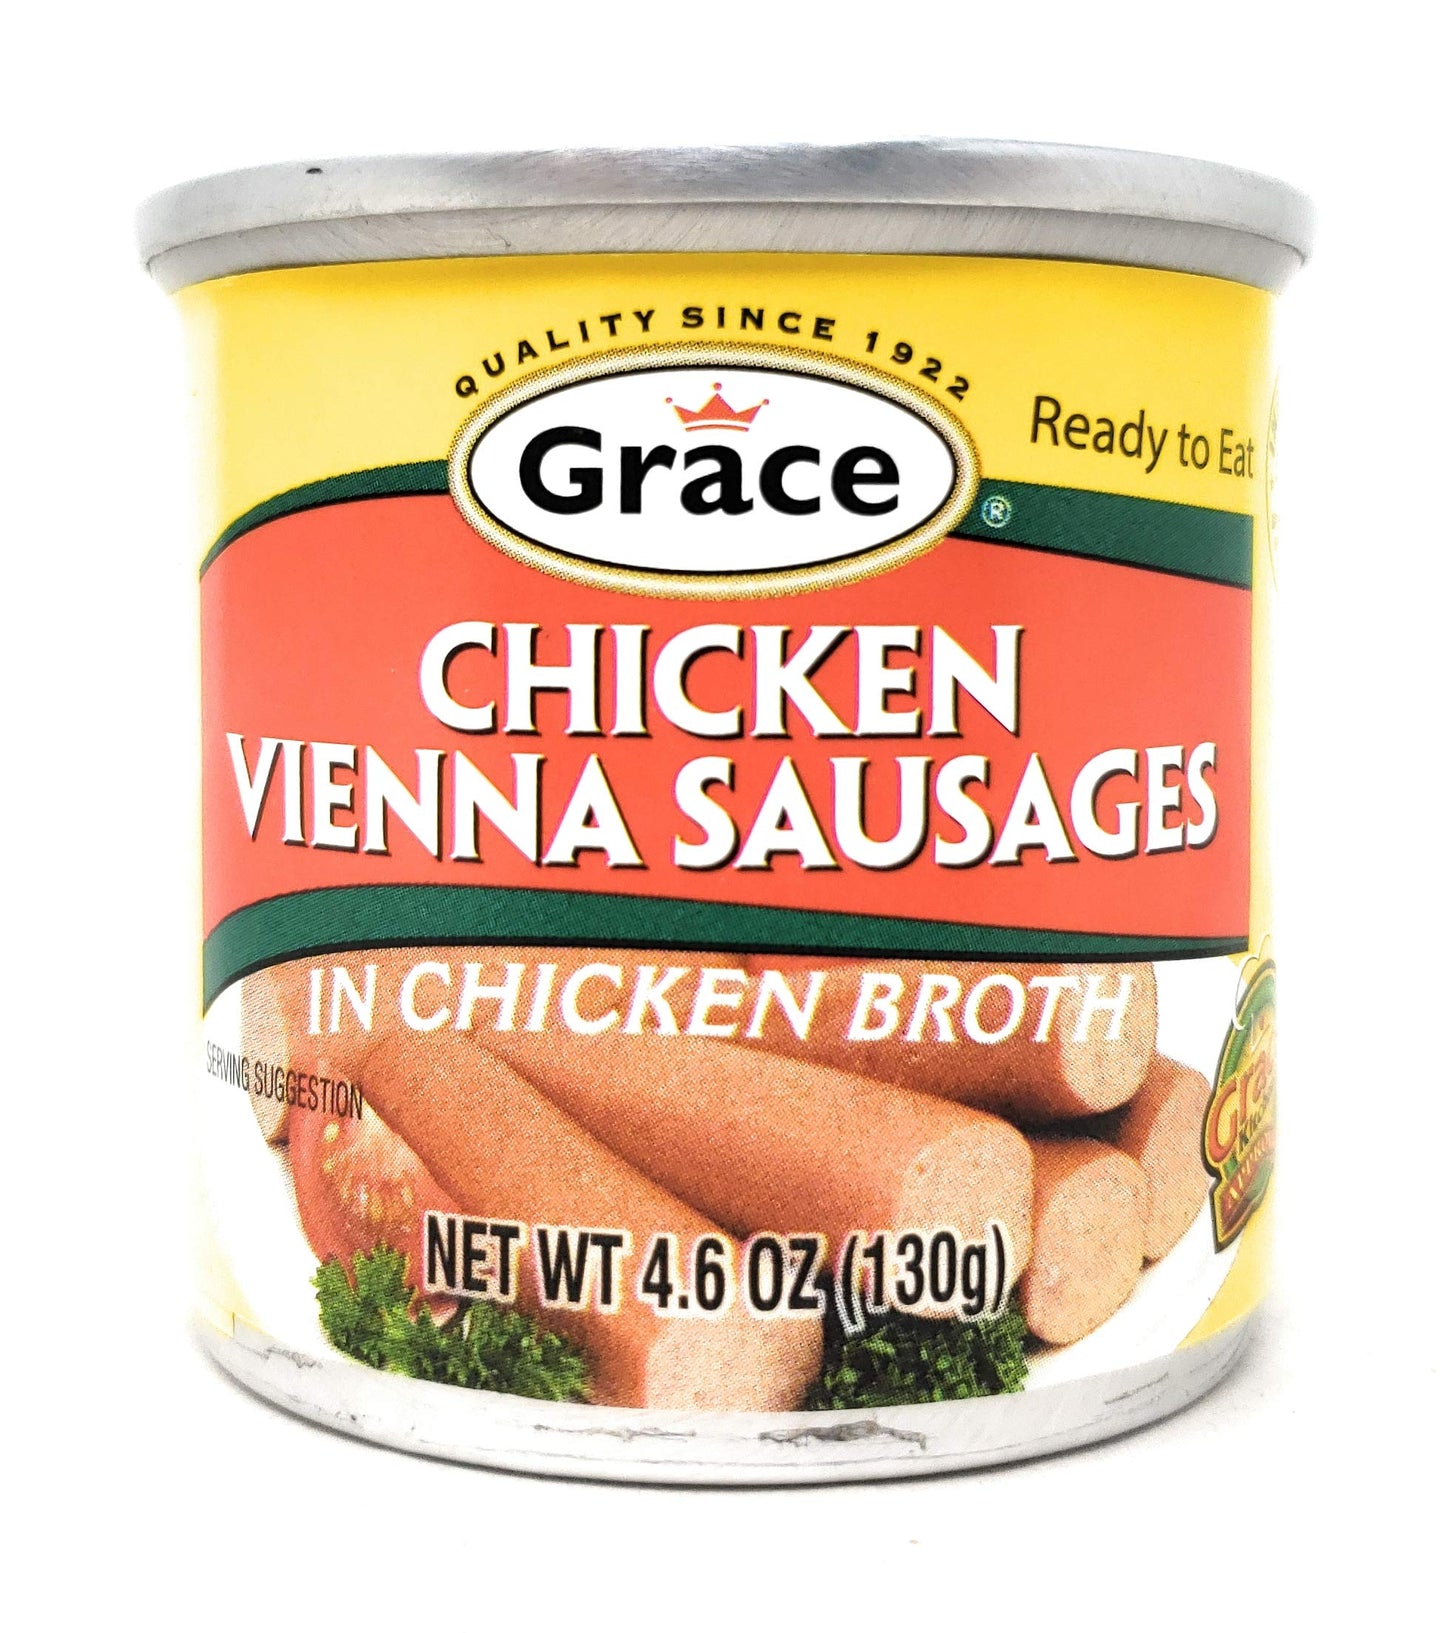 Grace Chicken Vienna Sausages in Chicken Broth (8 Pack, Total of 36.8oz)